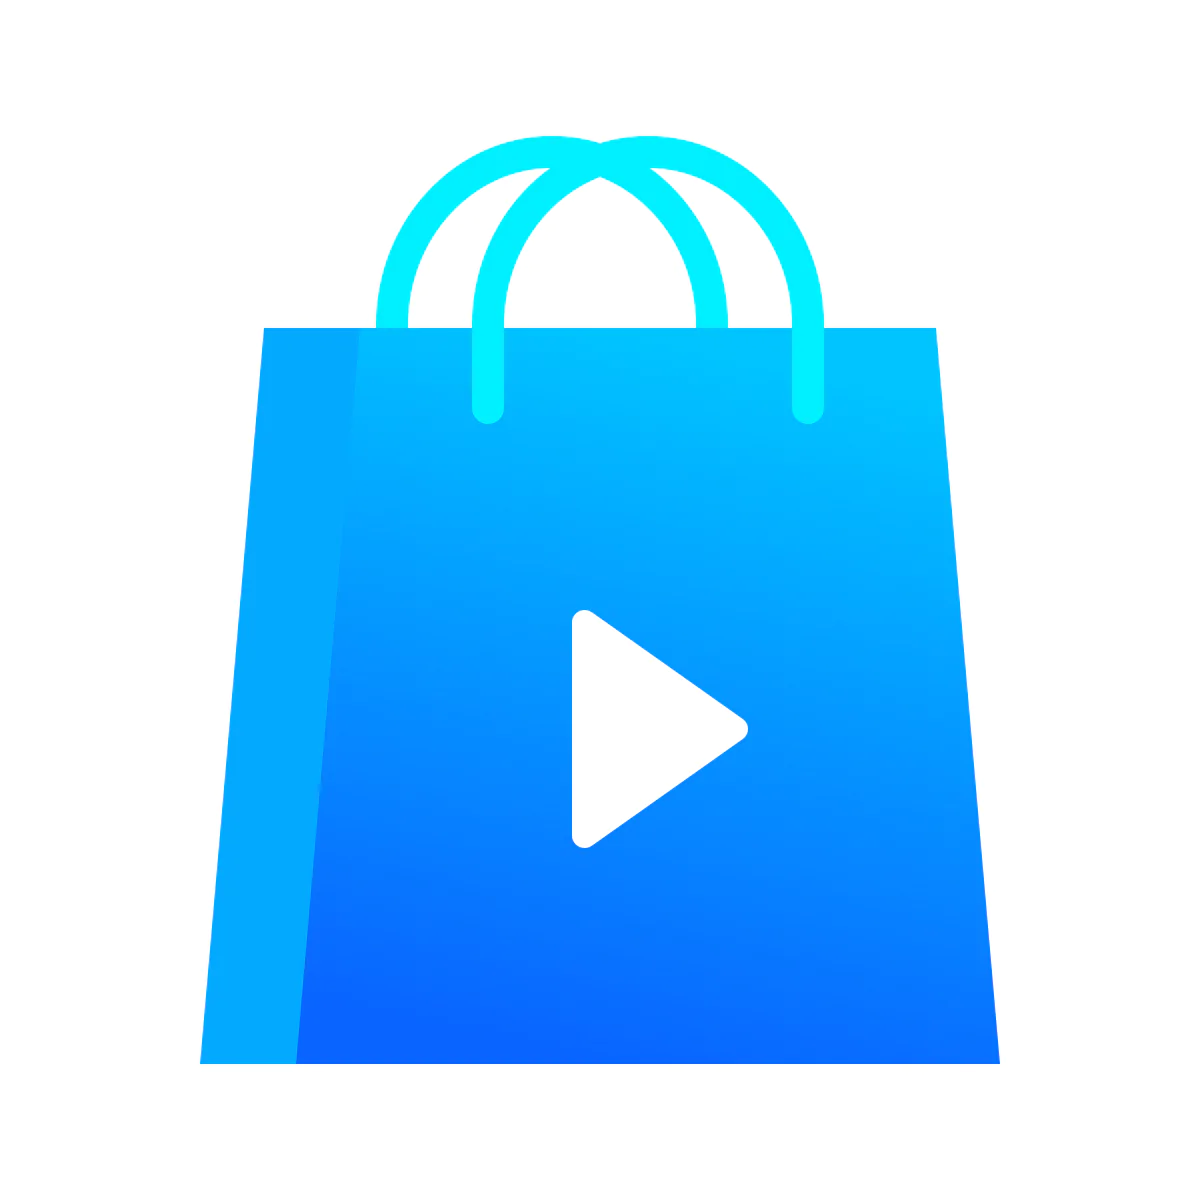 Vimotia Shoppable Videos & UGC